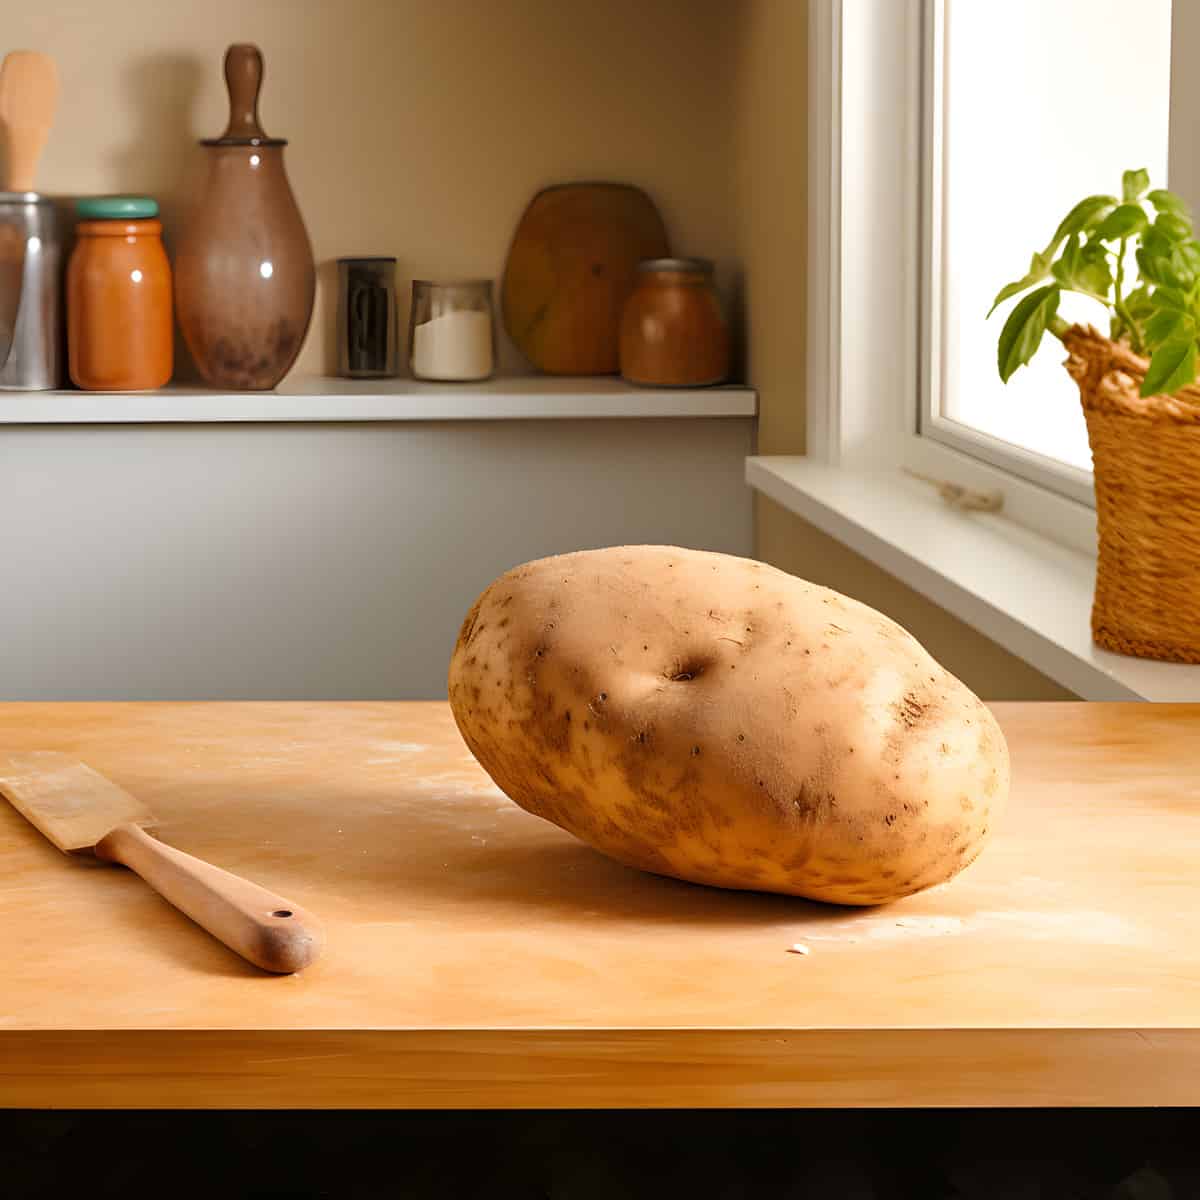 Umatilla Russet Potatoes on a kitchen counter